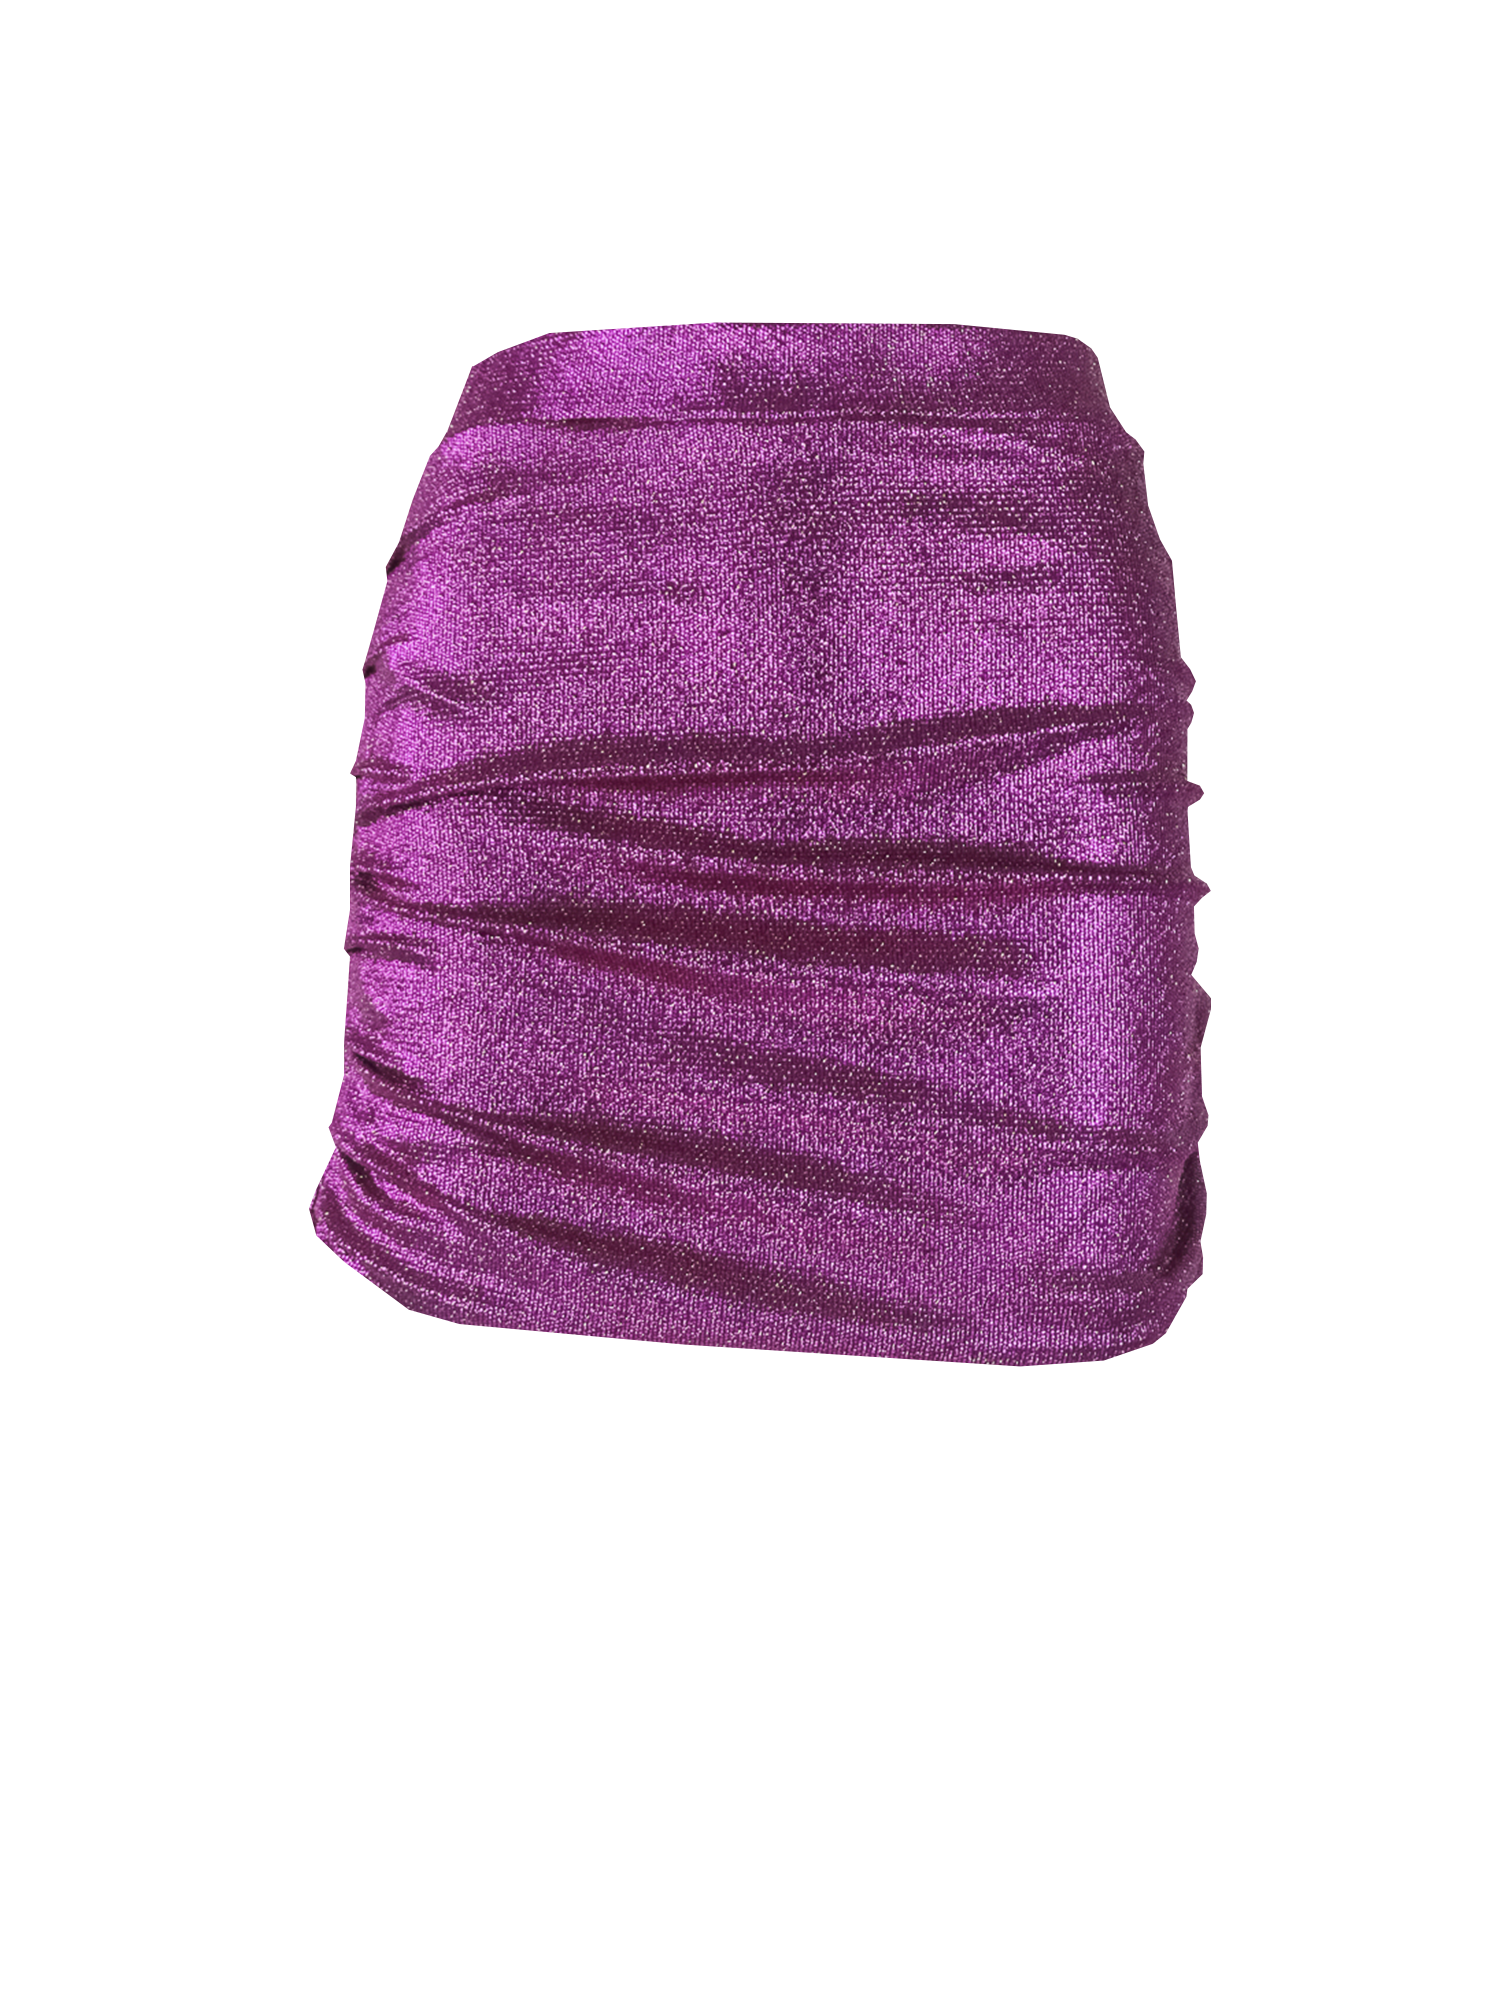 NINA - drap skirt in fuchsia lurex